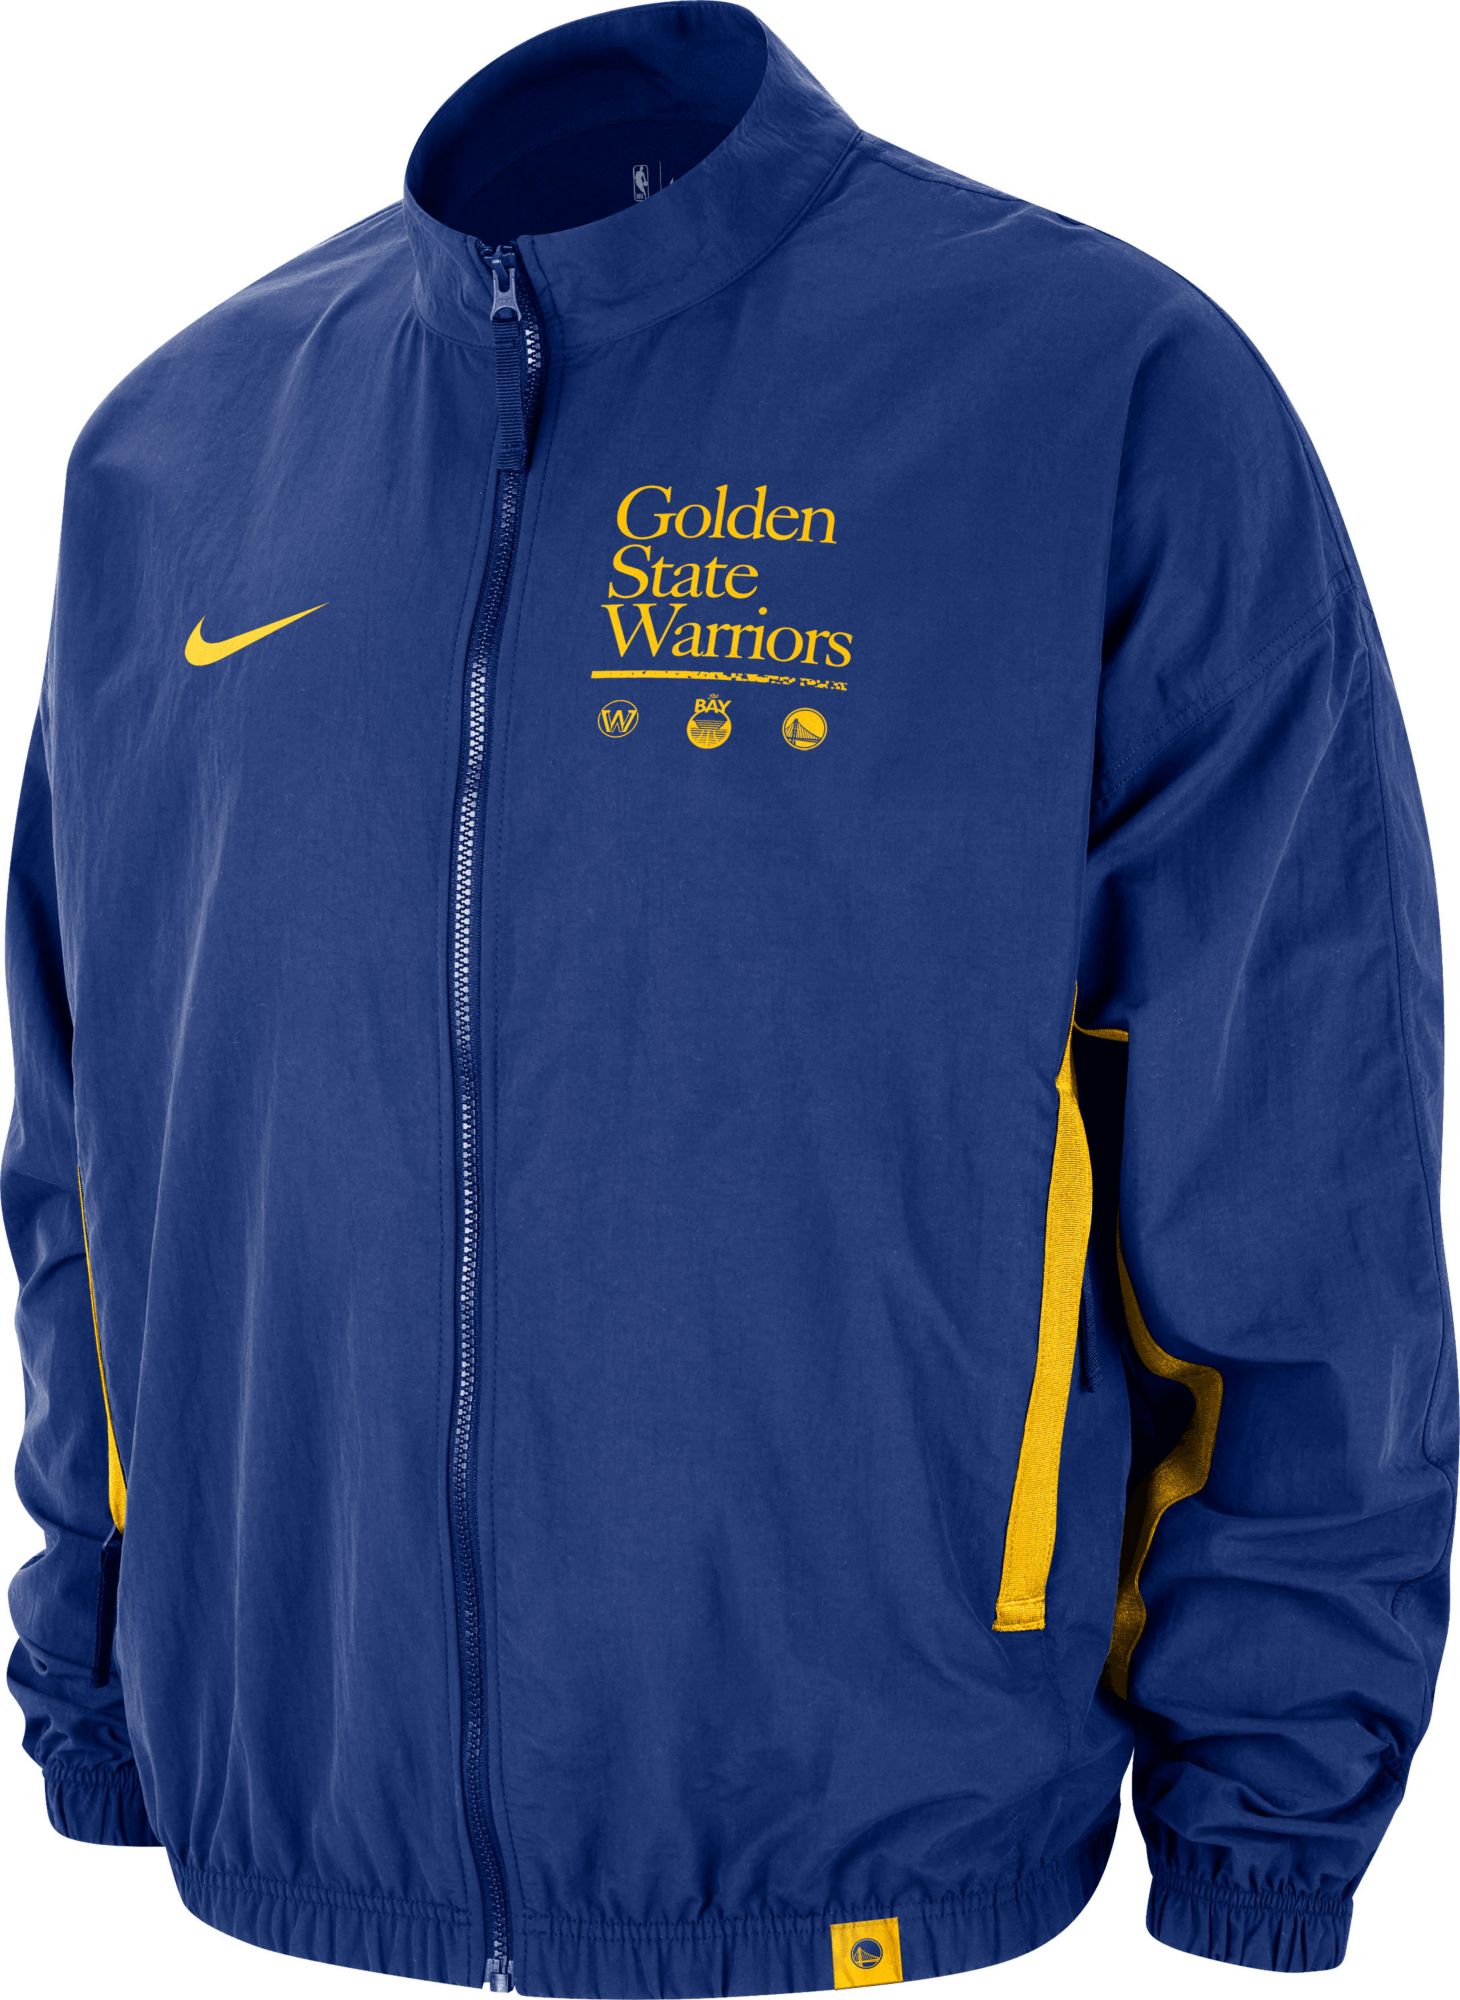 Nike Men's Golden State Warriors Courtside Woven Jacket